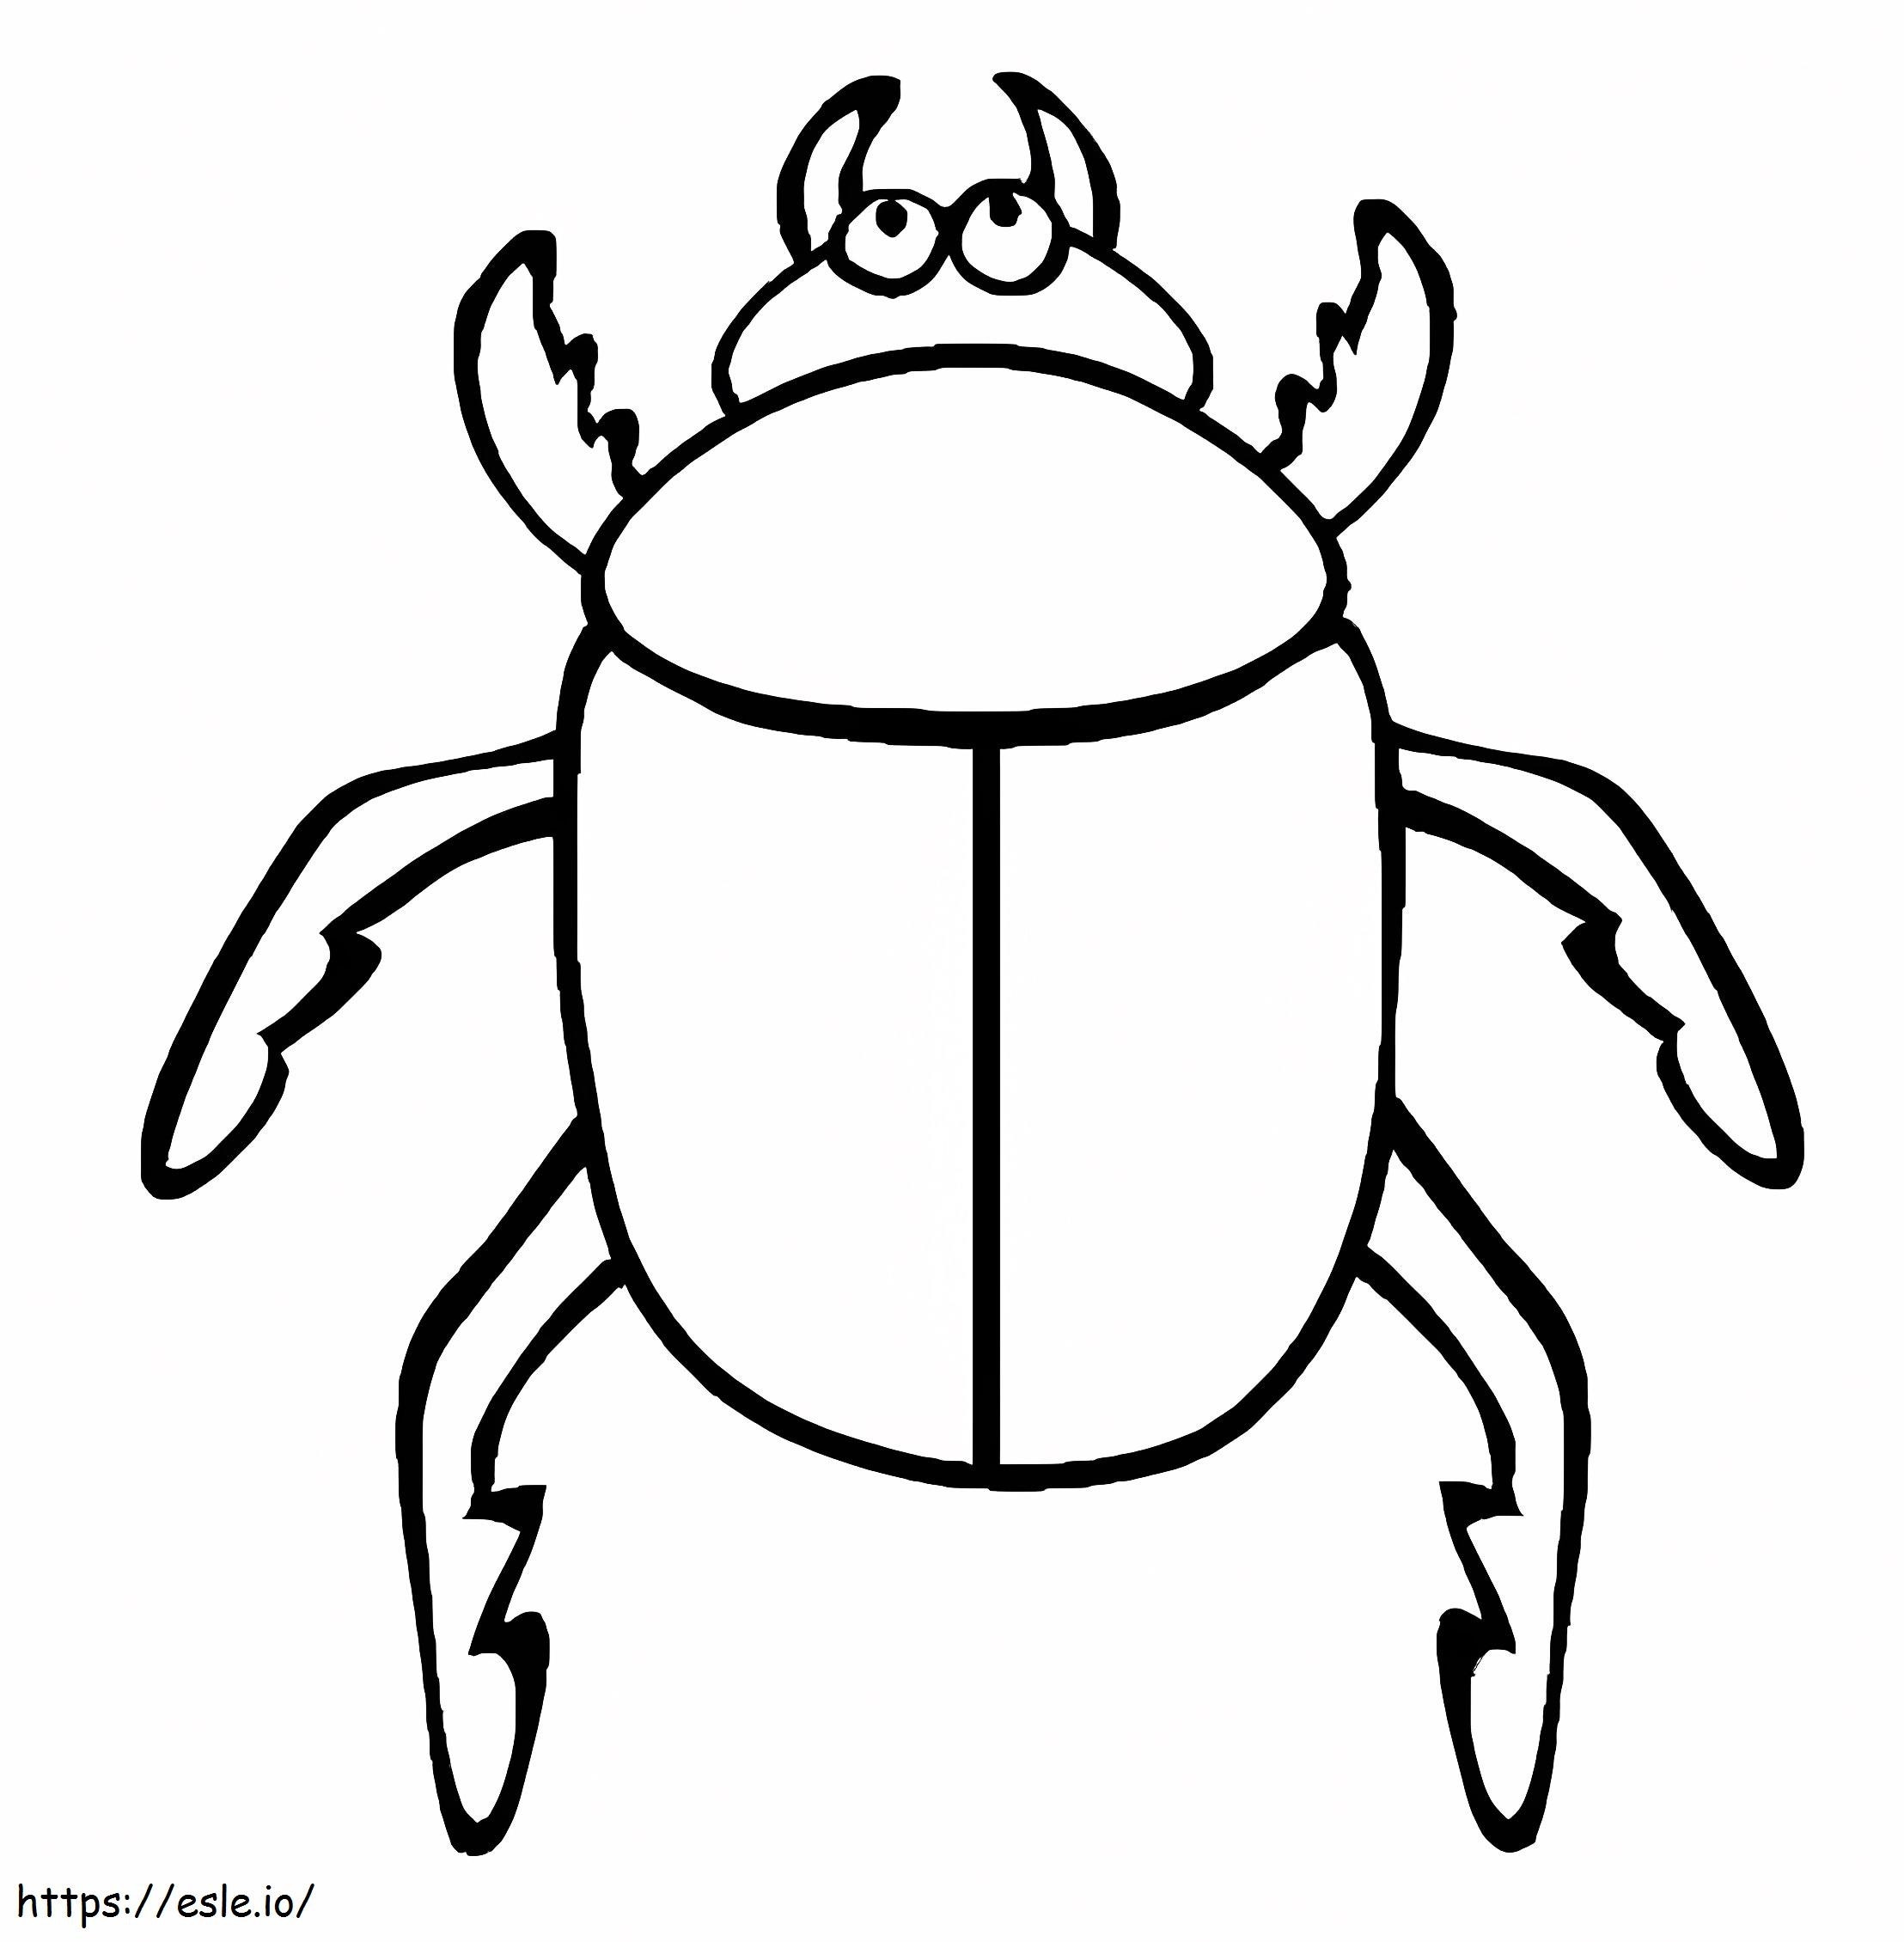 Käfer ausmalbilder